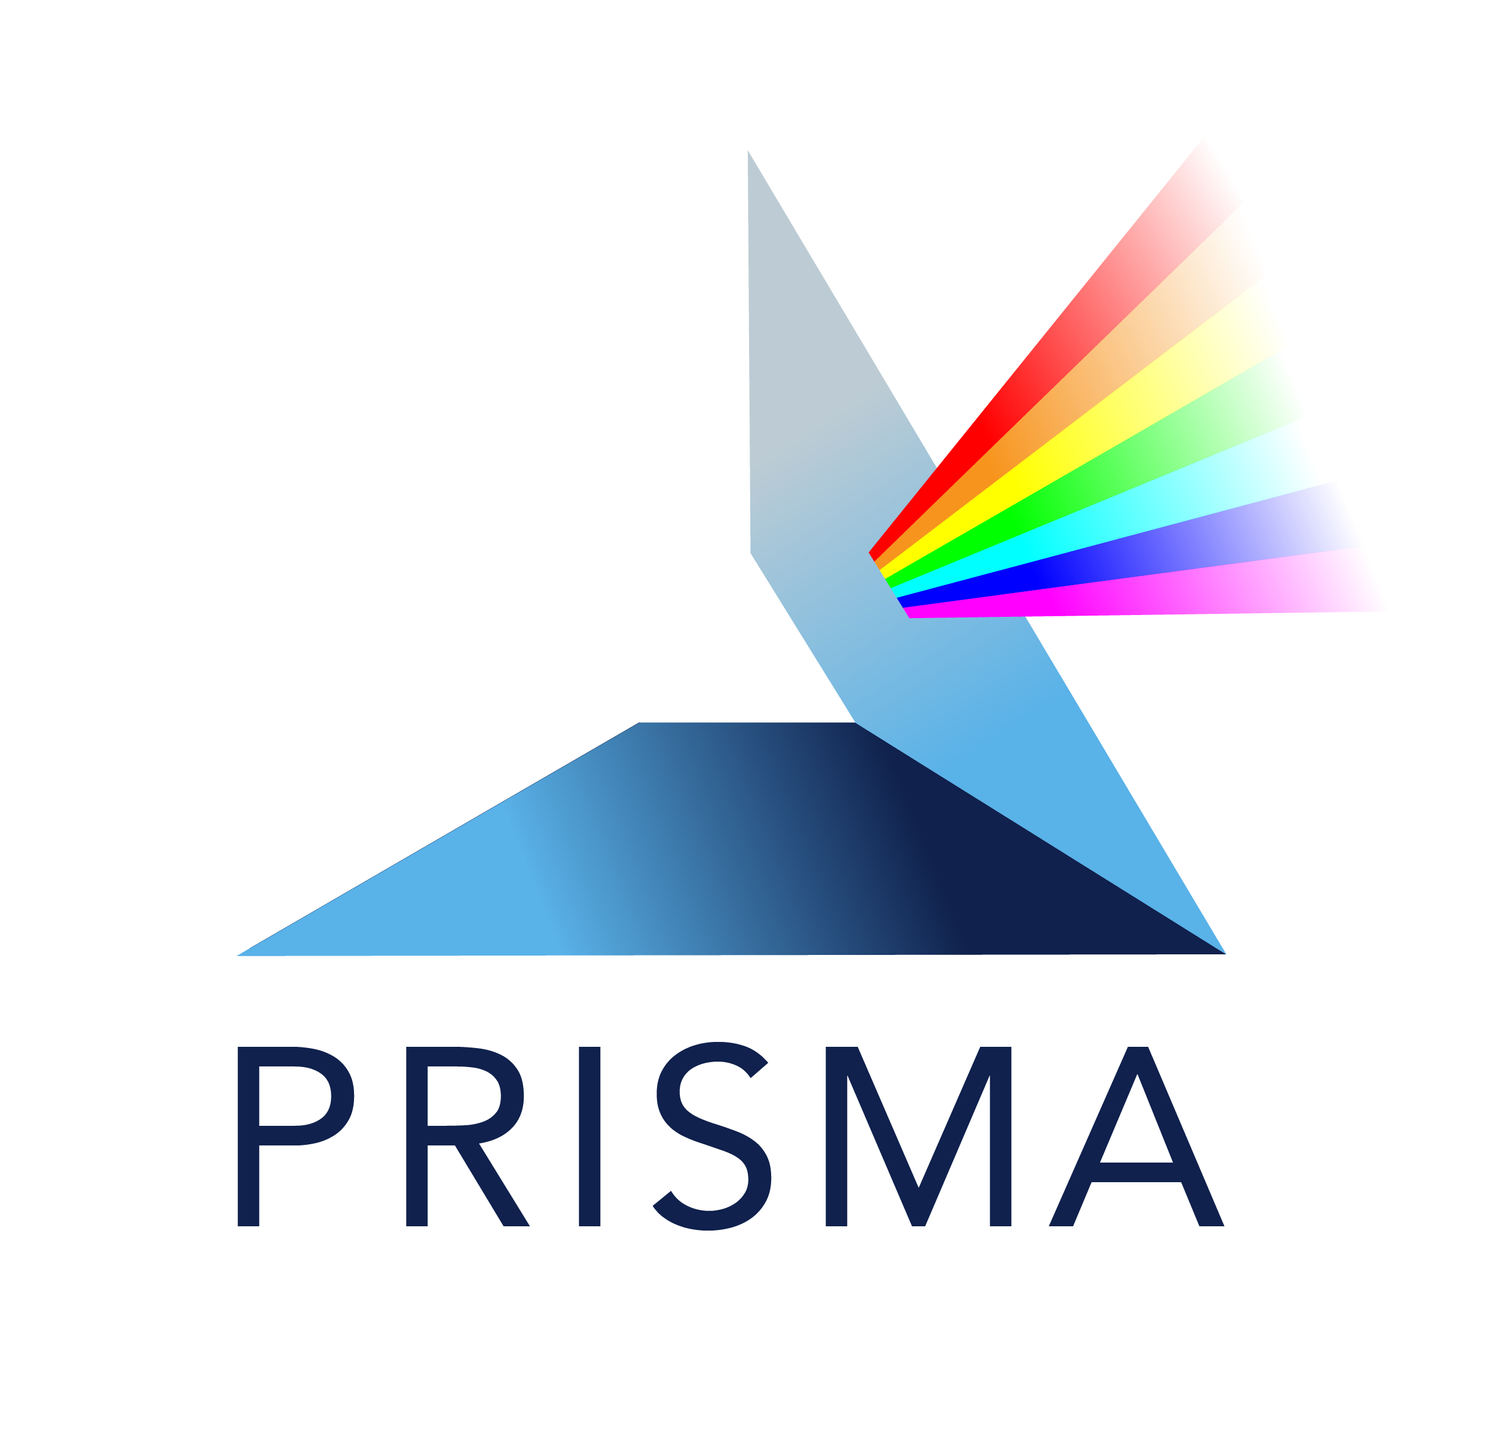 PRISMA statement